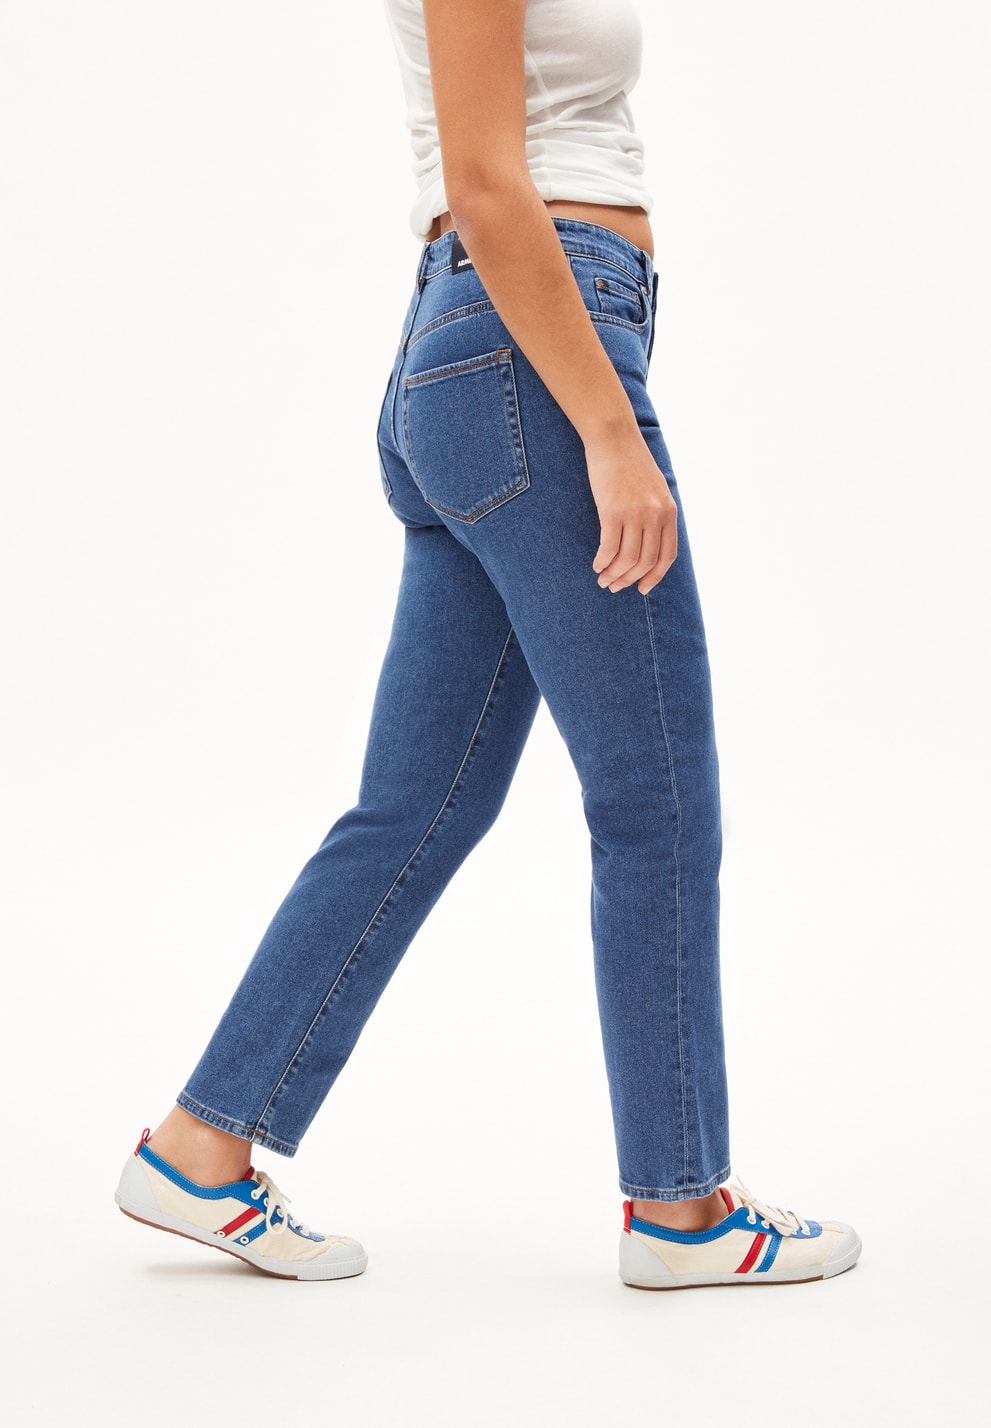 Jeans LEJAANI slim fit blue base | ARMEDANGELS